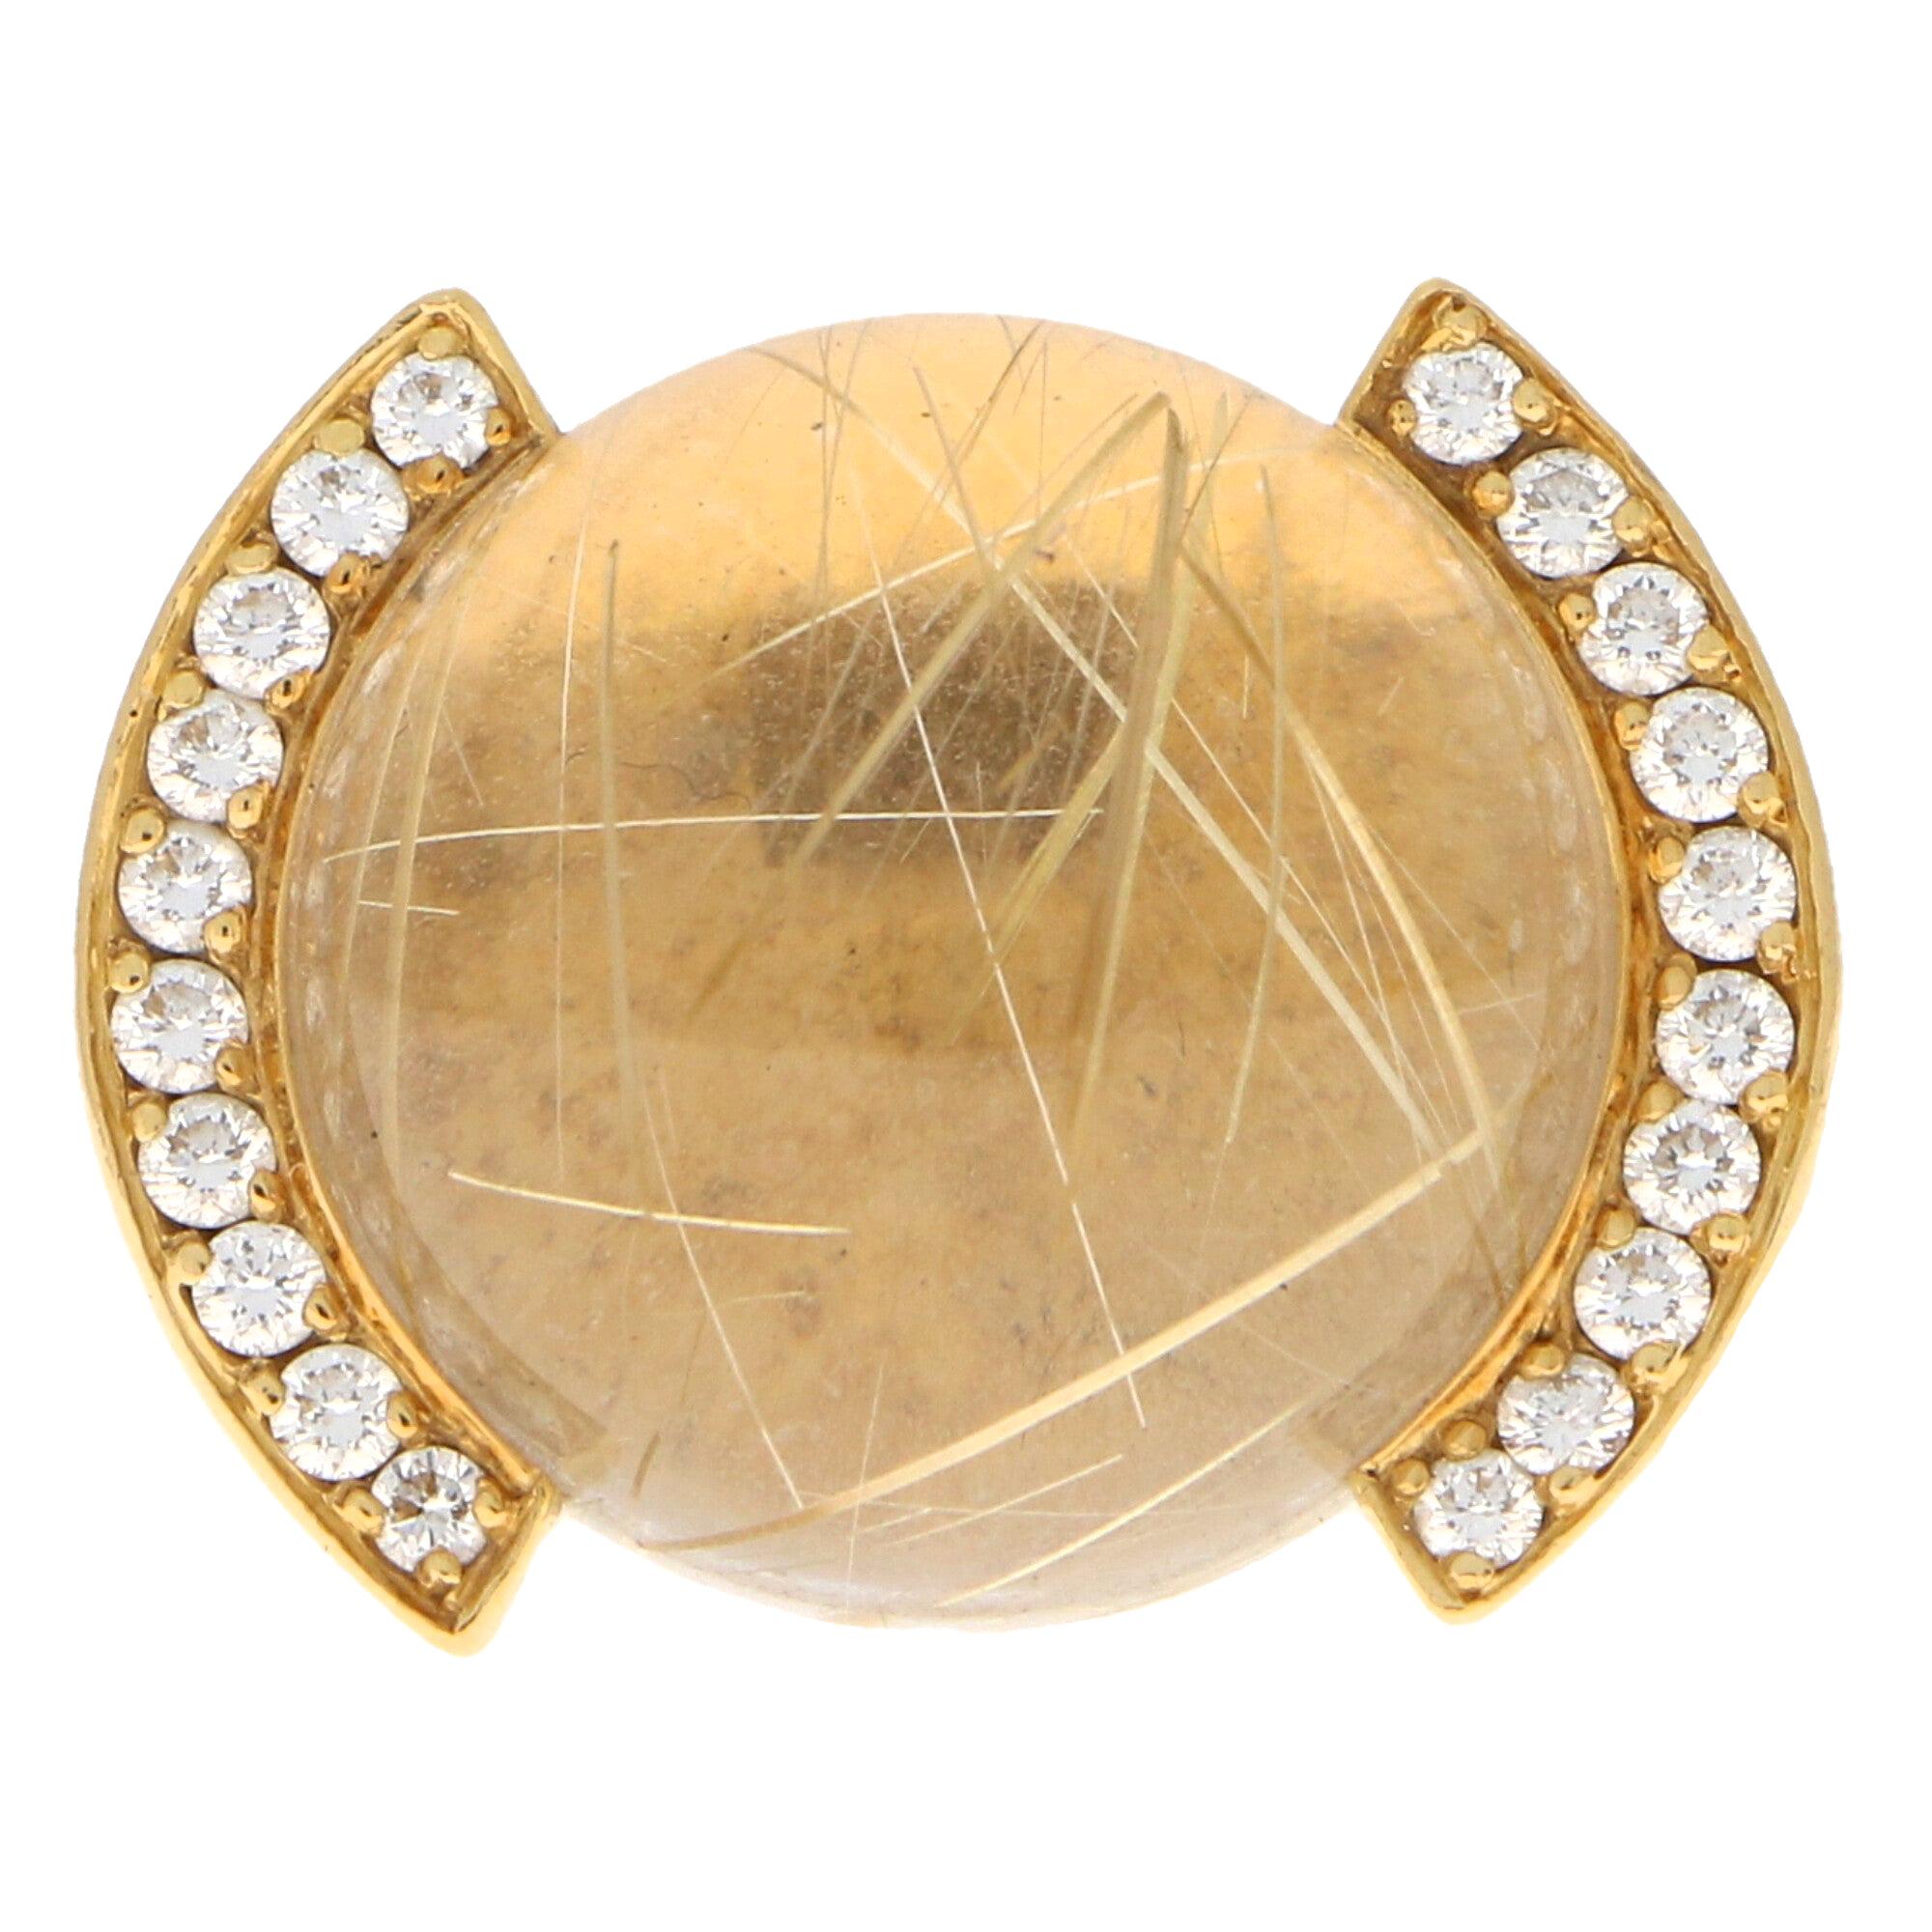 Vintage Cartier Rutilated Quartz and Diamond Bombe Ring Set in 18 Karat Gold